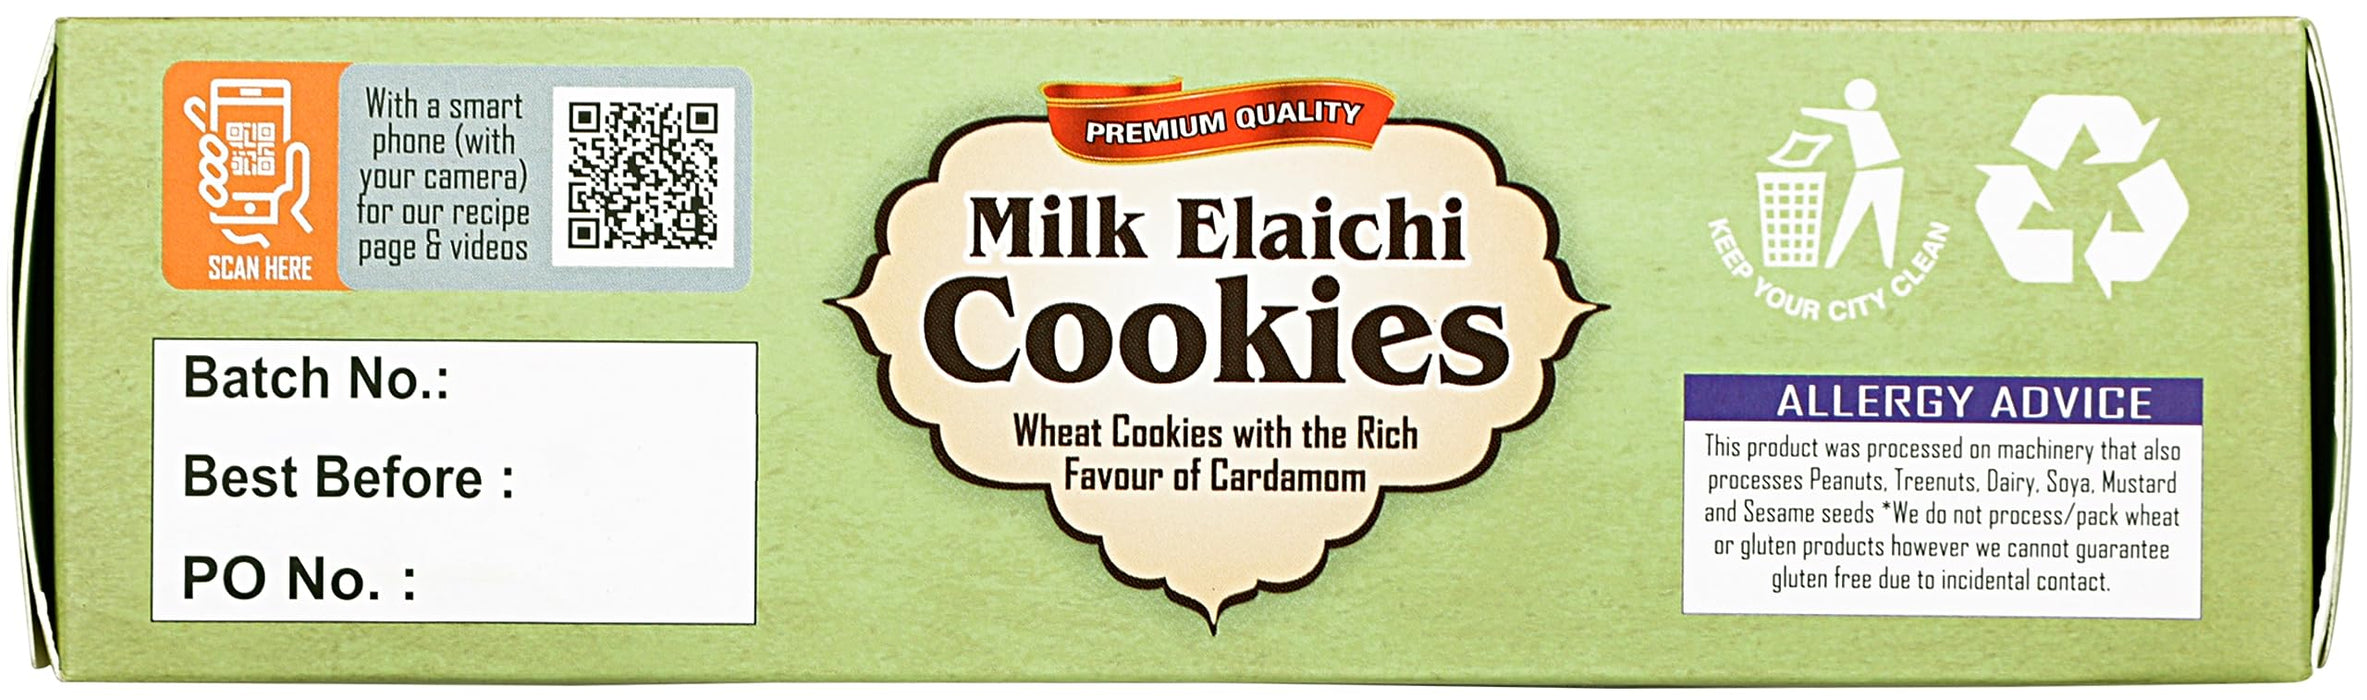 Rani Milk Elaichi Cookies (Wheat Cookies with Almond Flavor) 14oz (400g) Pack of 3+1 FREE, Premium Quality Indian Cookies ~ All Natural | Vegan | Non-GMO | Indian Origin